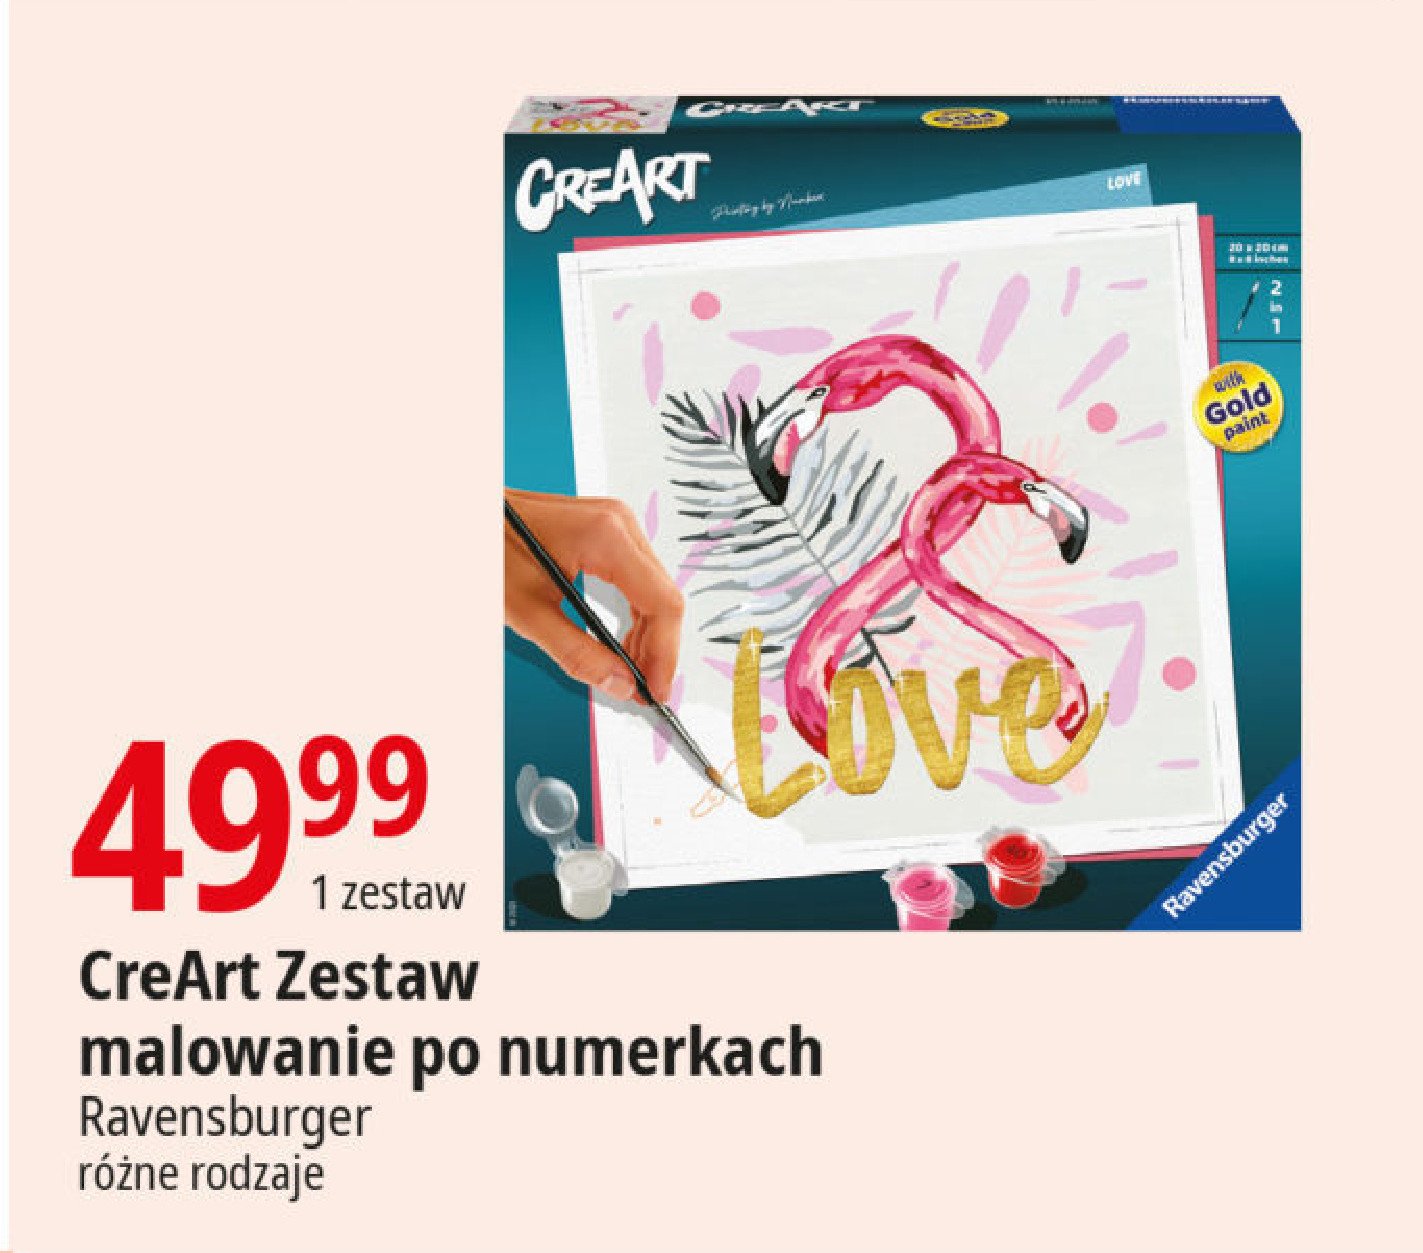 Malowanie po numerkach flamingi Creart promocja